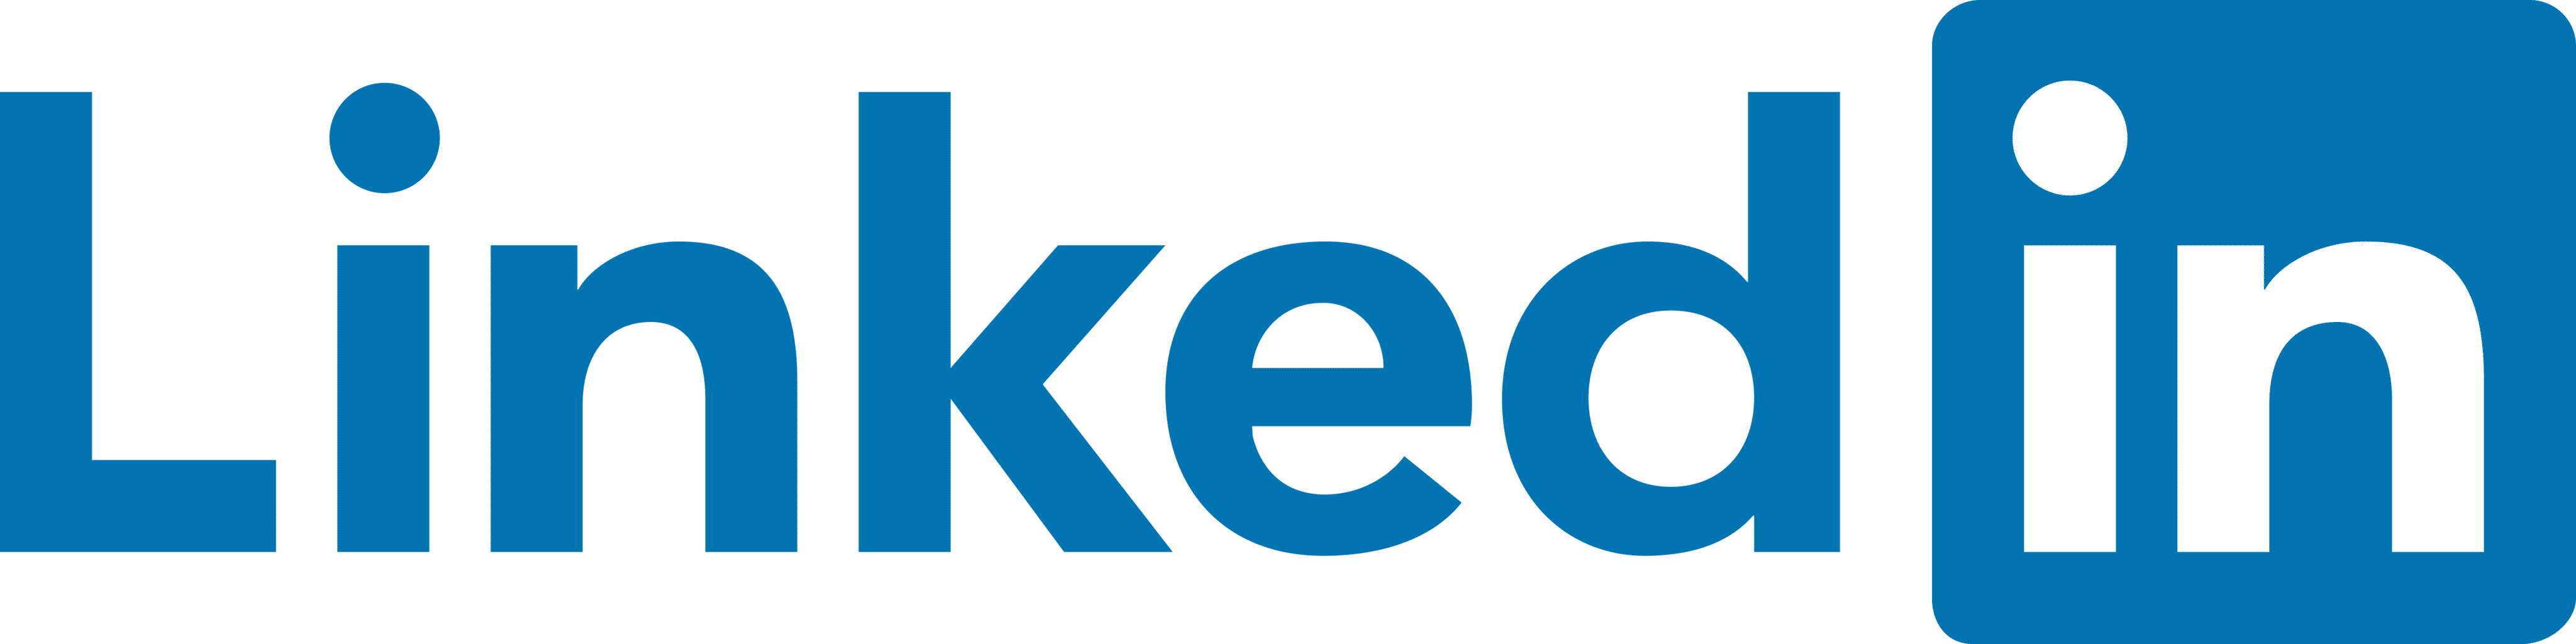 linkedin_logo_2019